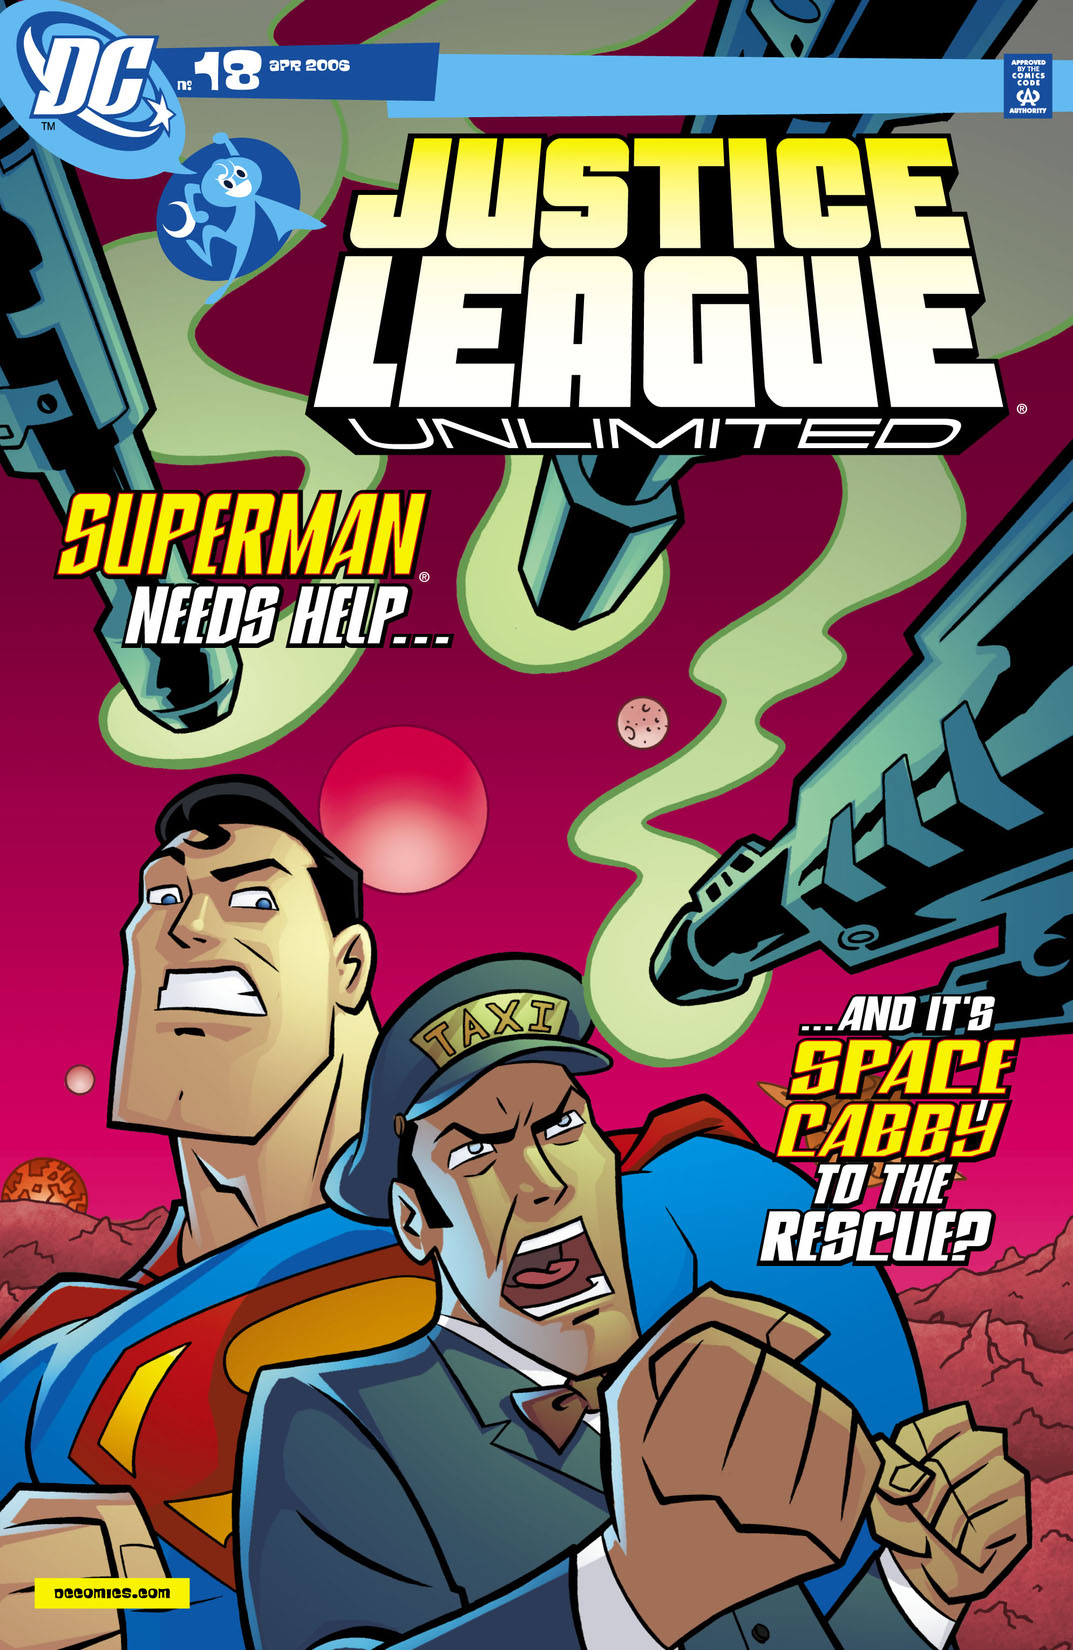 Justice League Unlimited #18 preview images